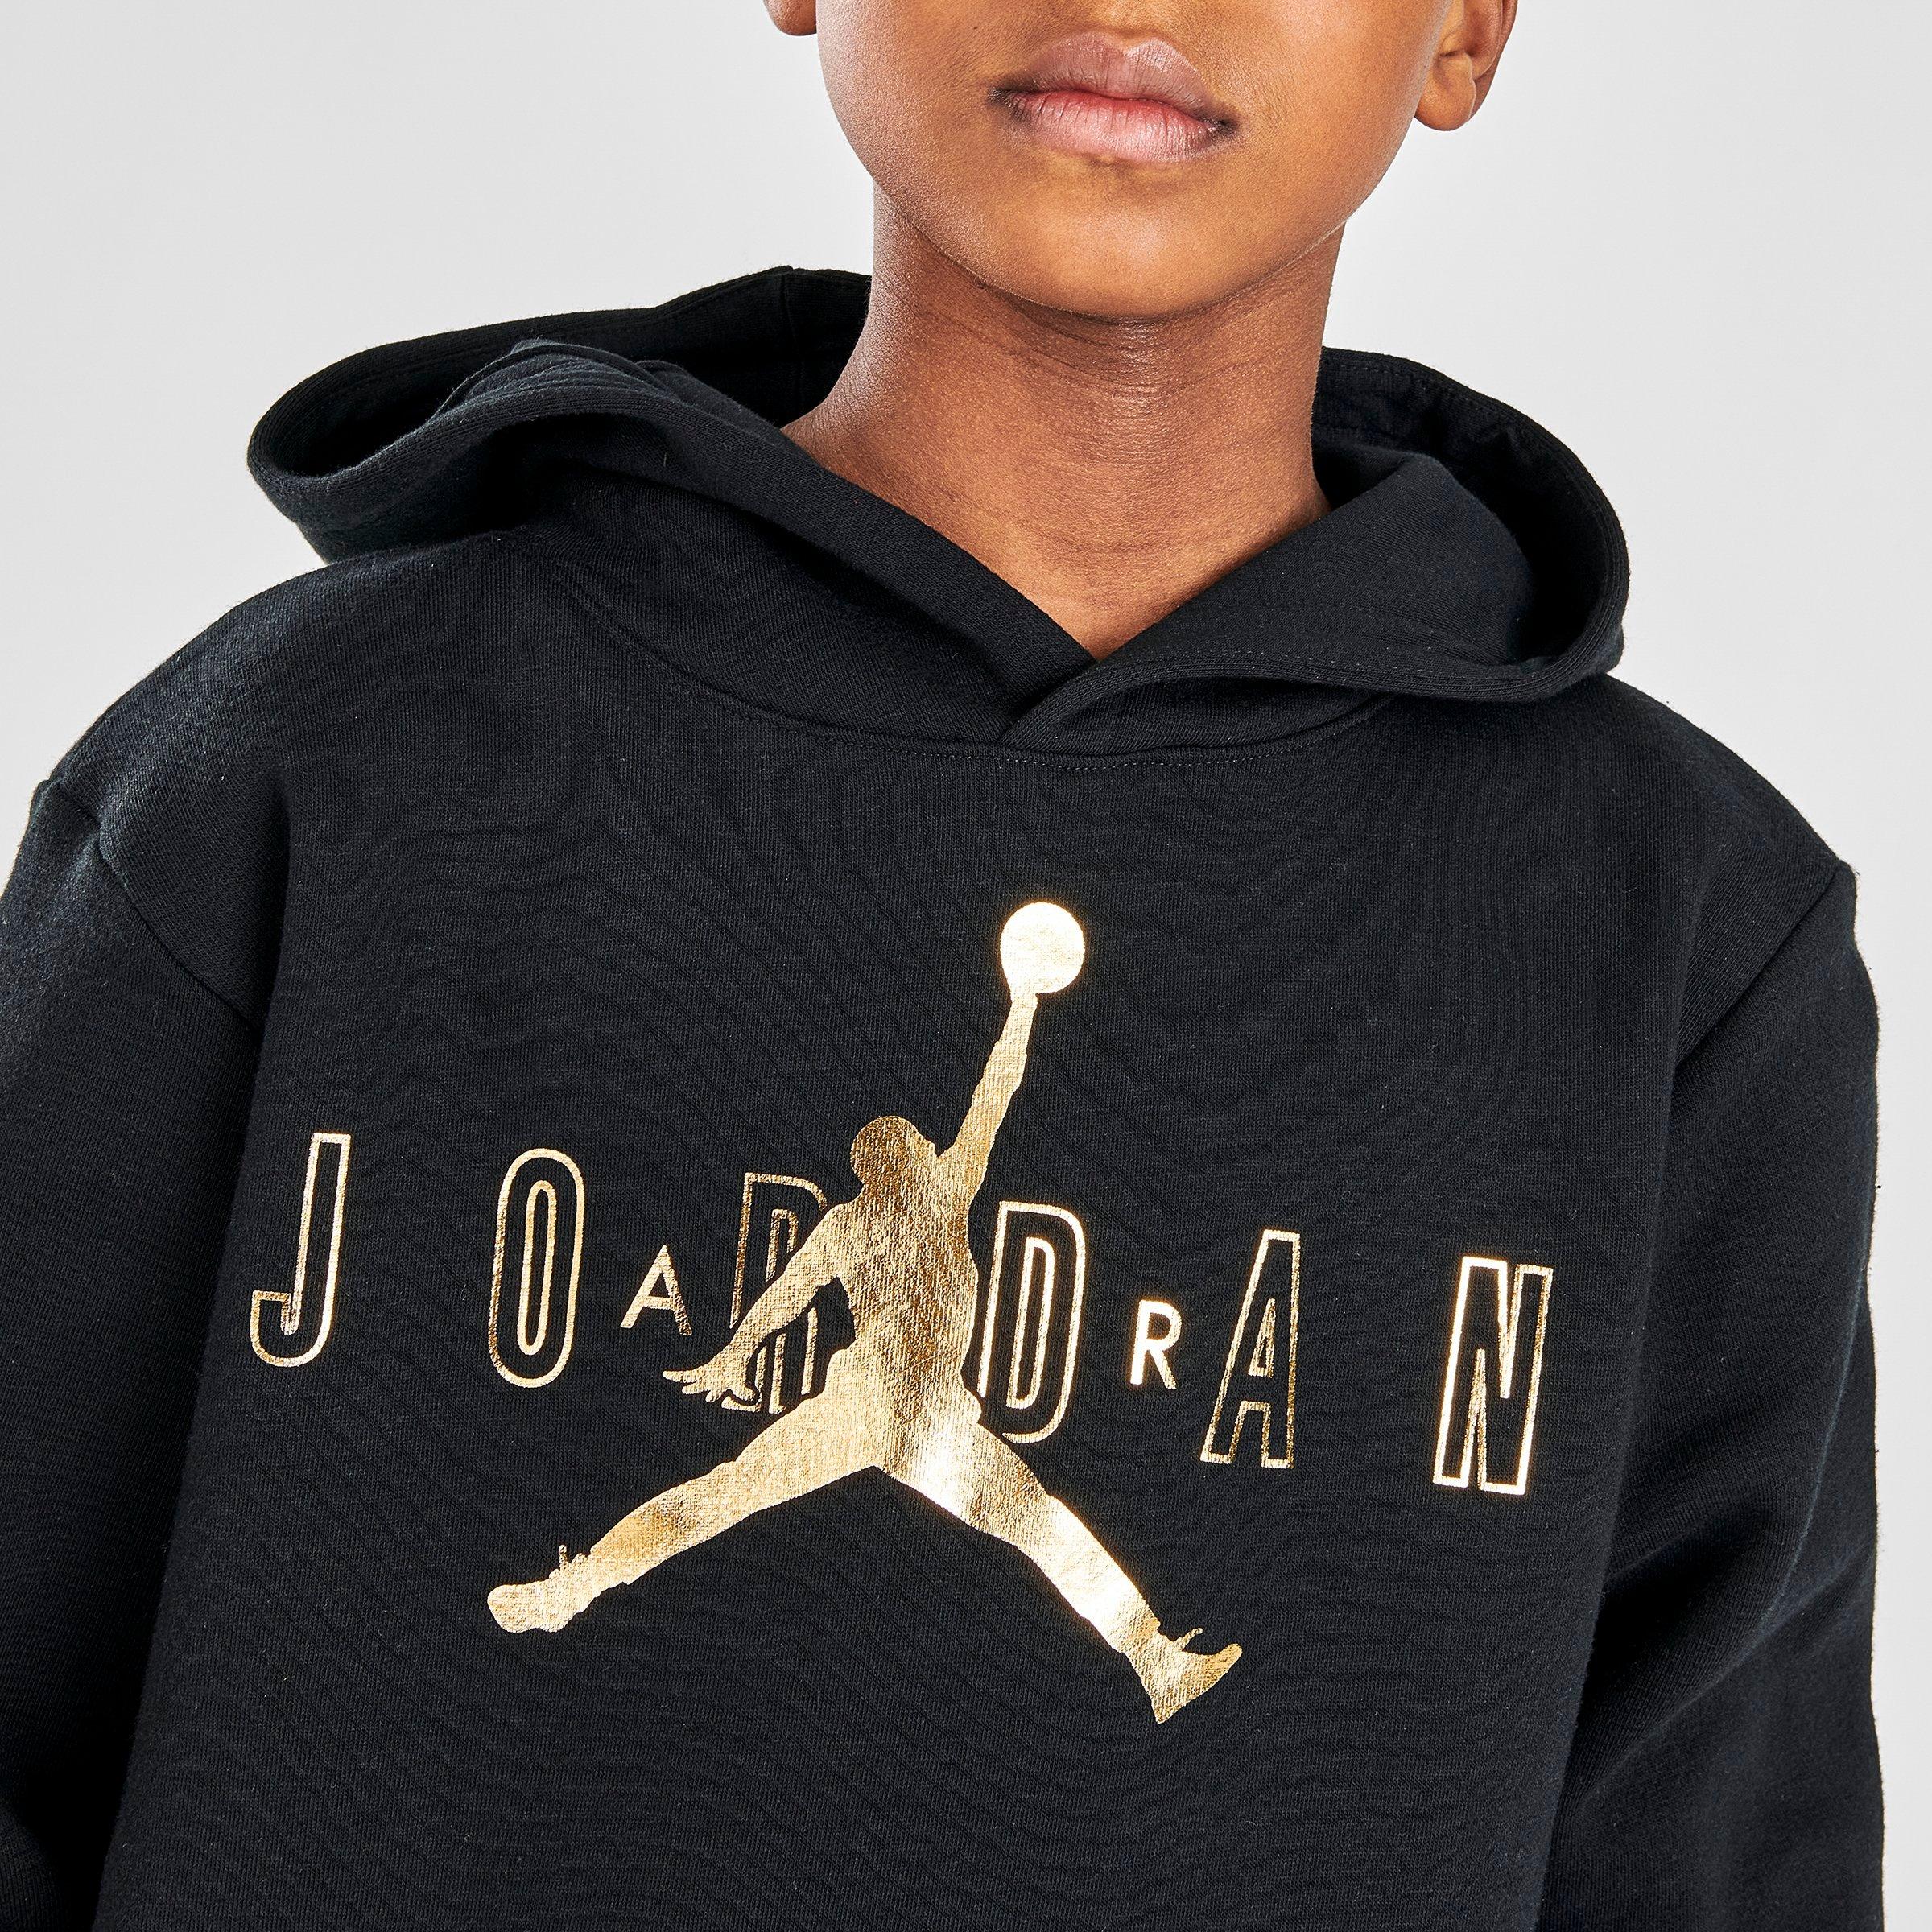 black and gold jordan jogging suit